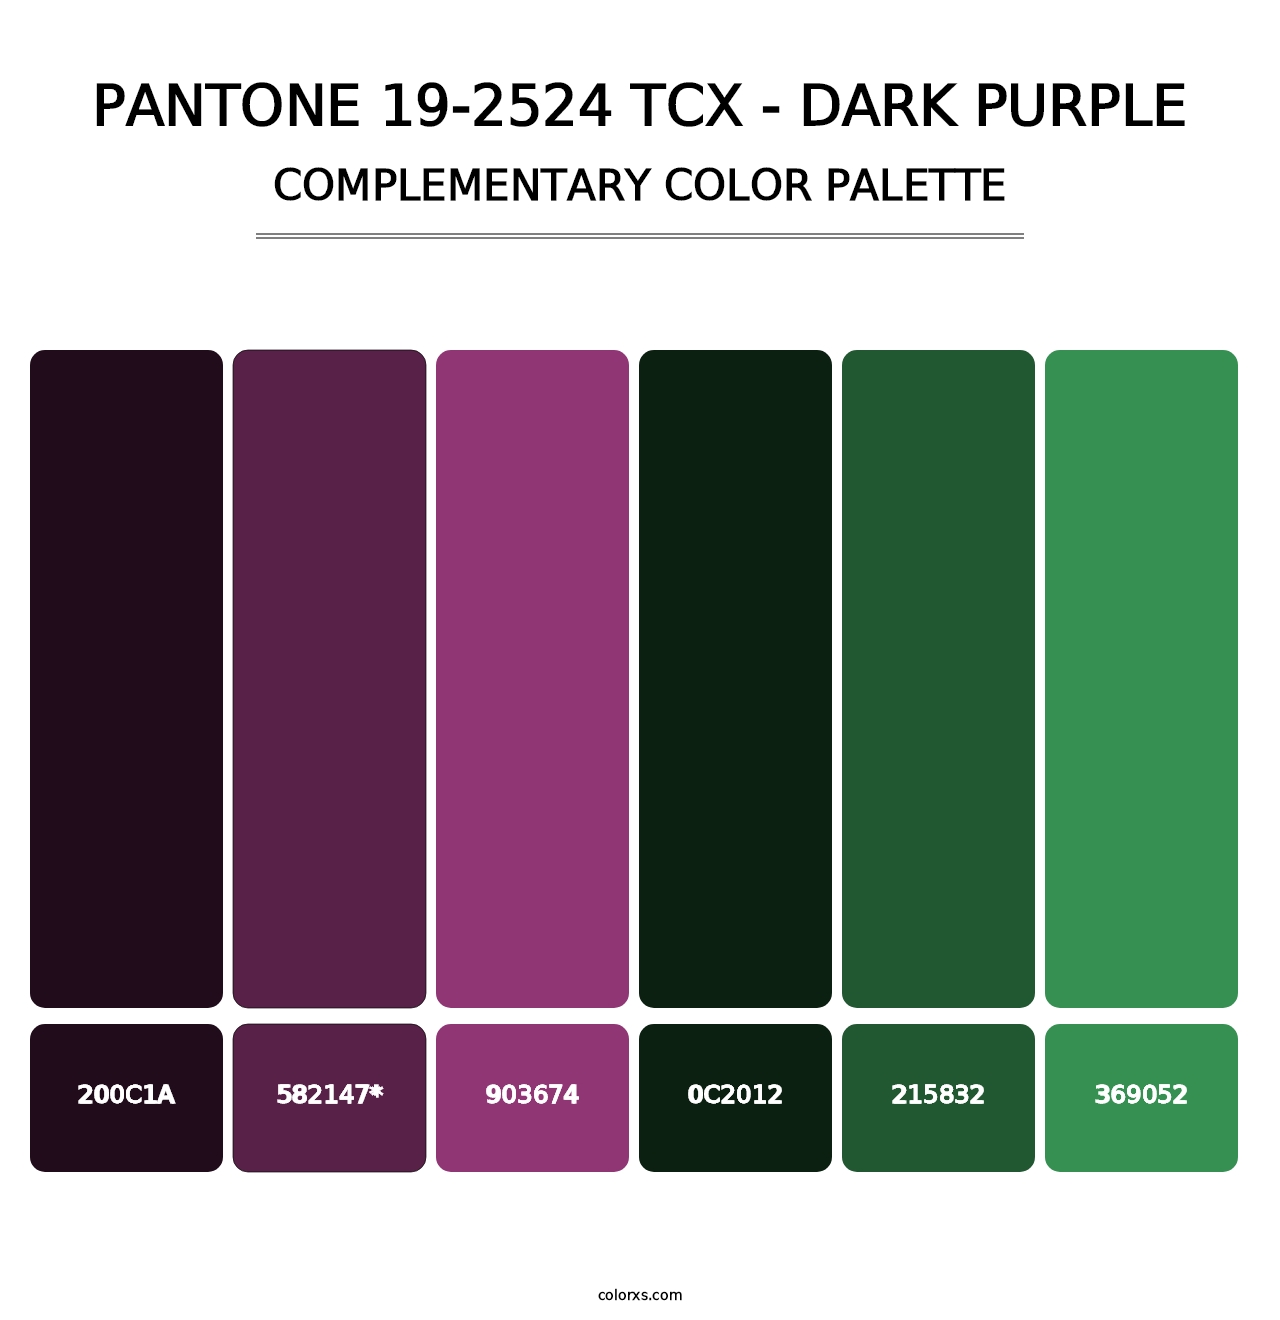 PANTONE 19-2524 TCX - Dark Purple - Complementary Color Palette